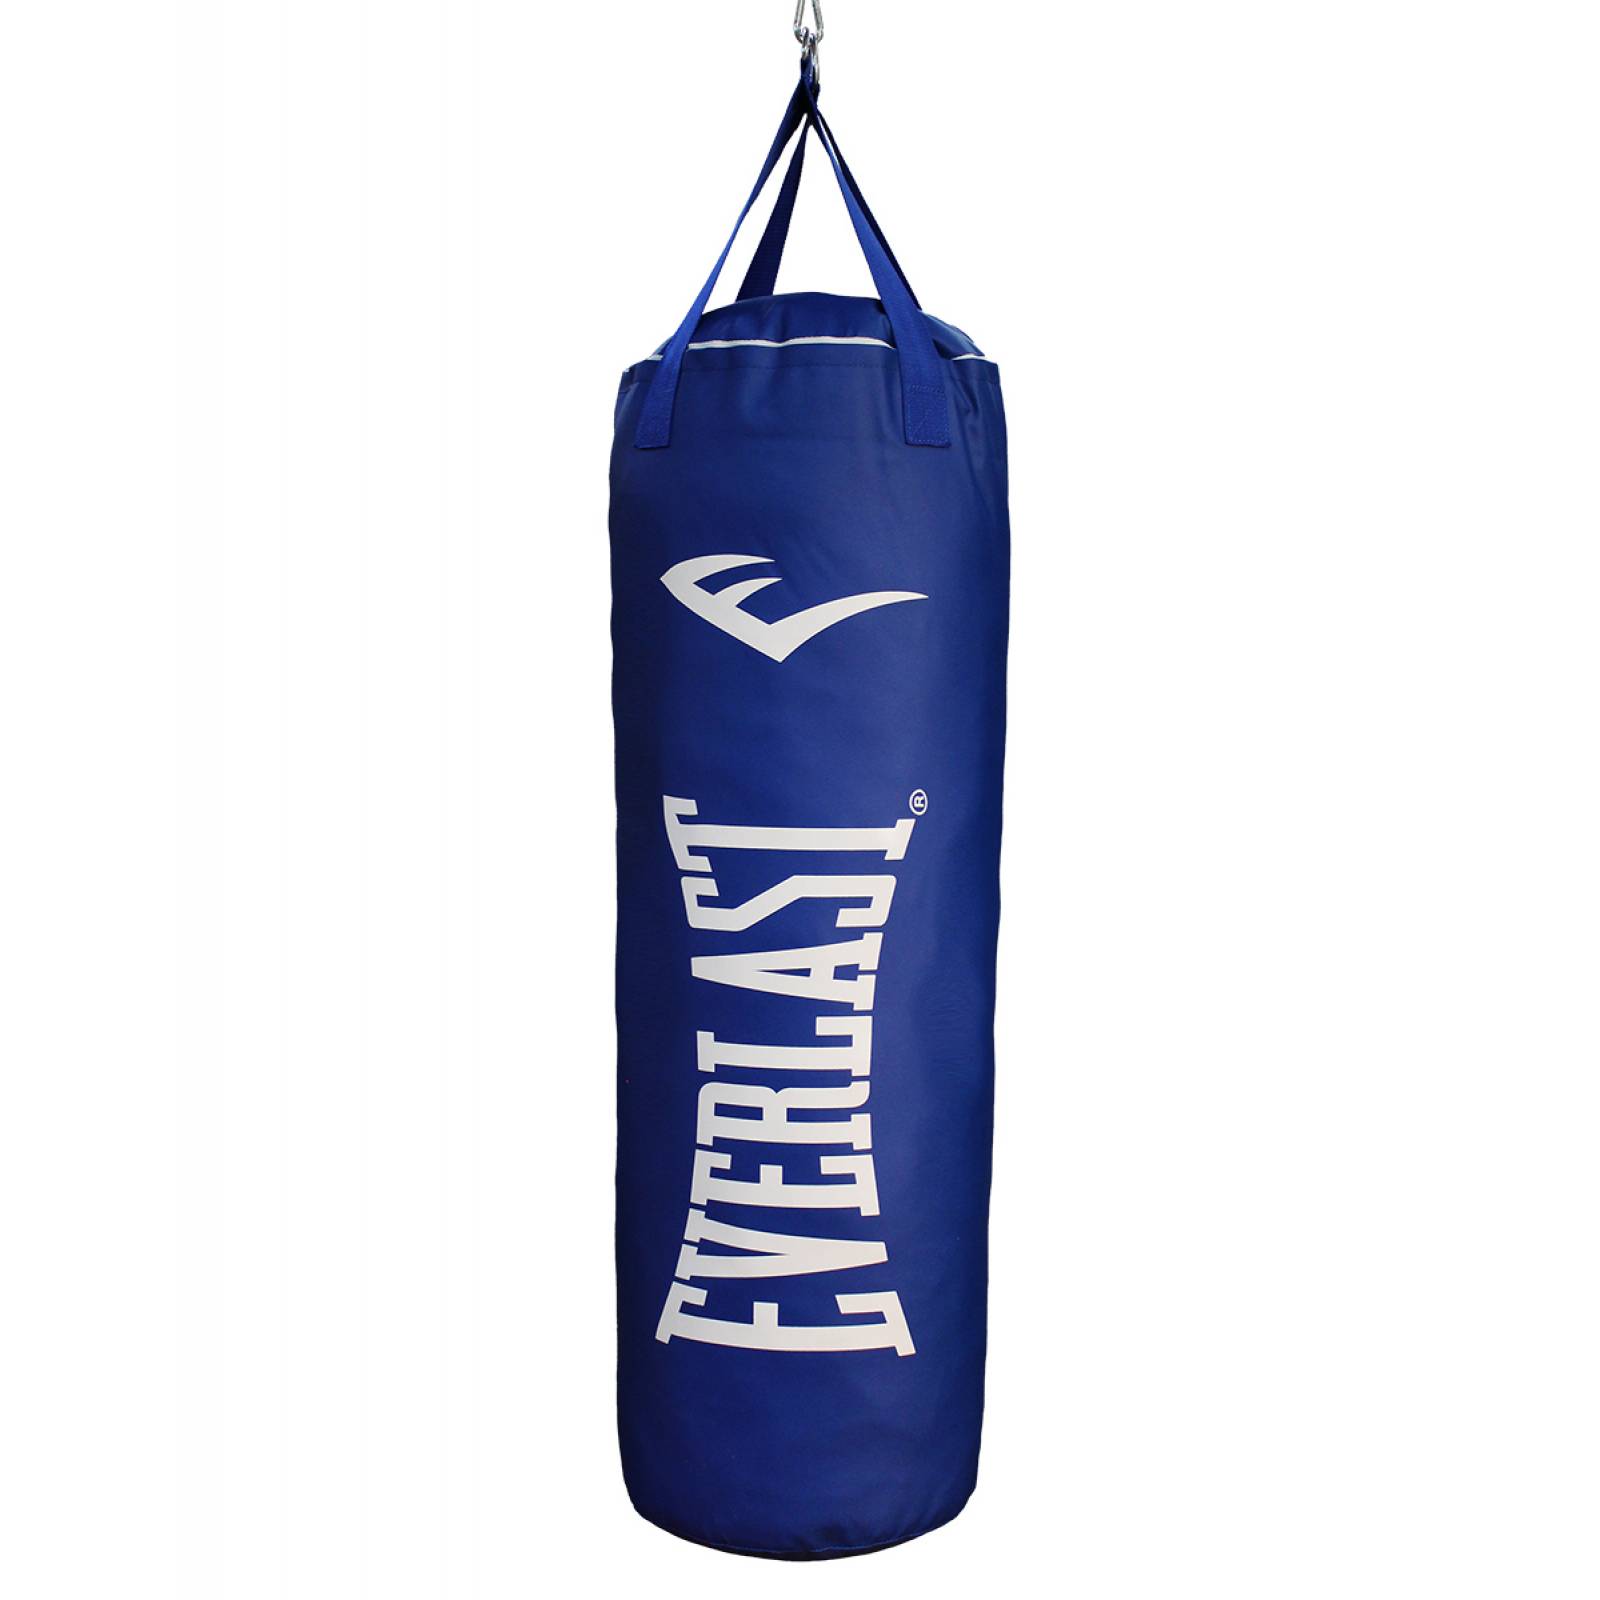 Costal everlast boxeo azul 70 lb (31.75 kg)